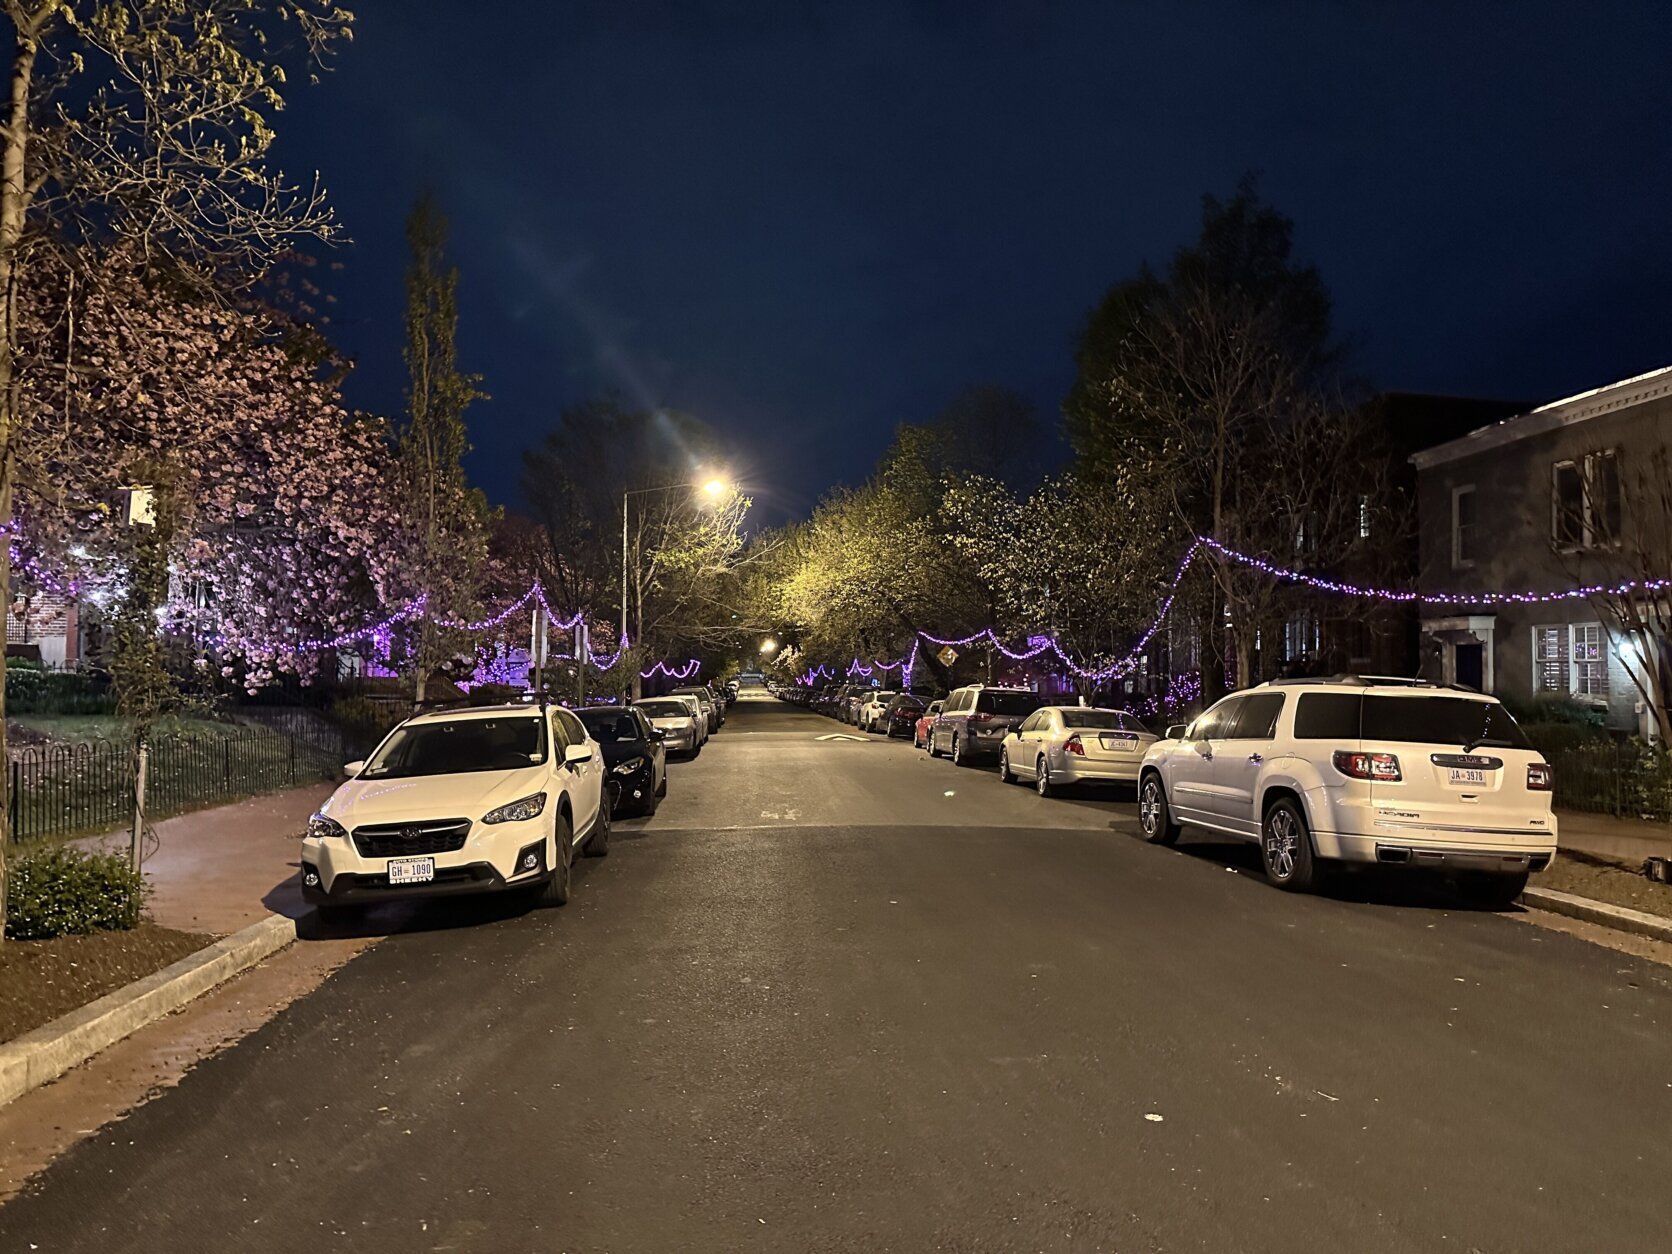 <p>Cherry blossom designs adorn this D.C. neighborhood.</p>
